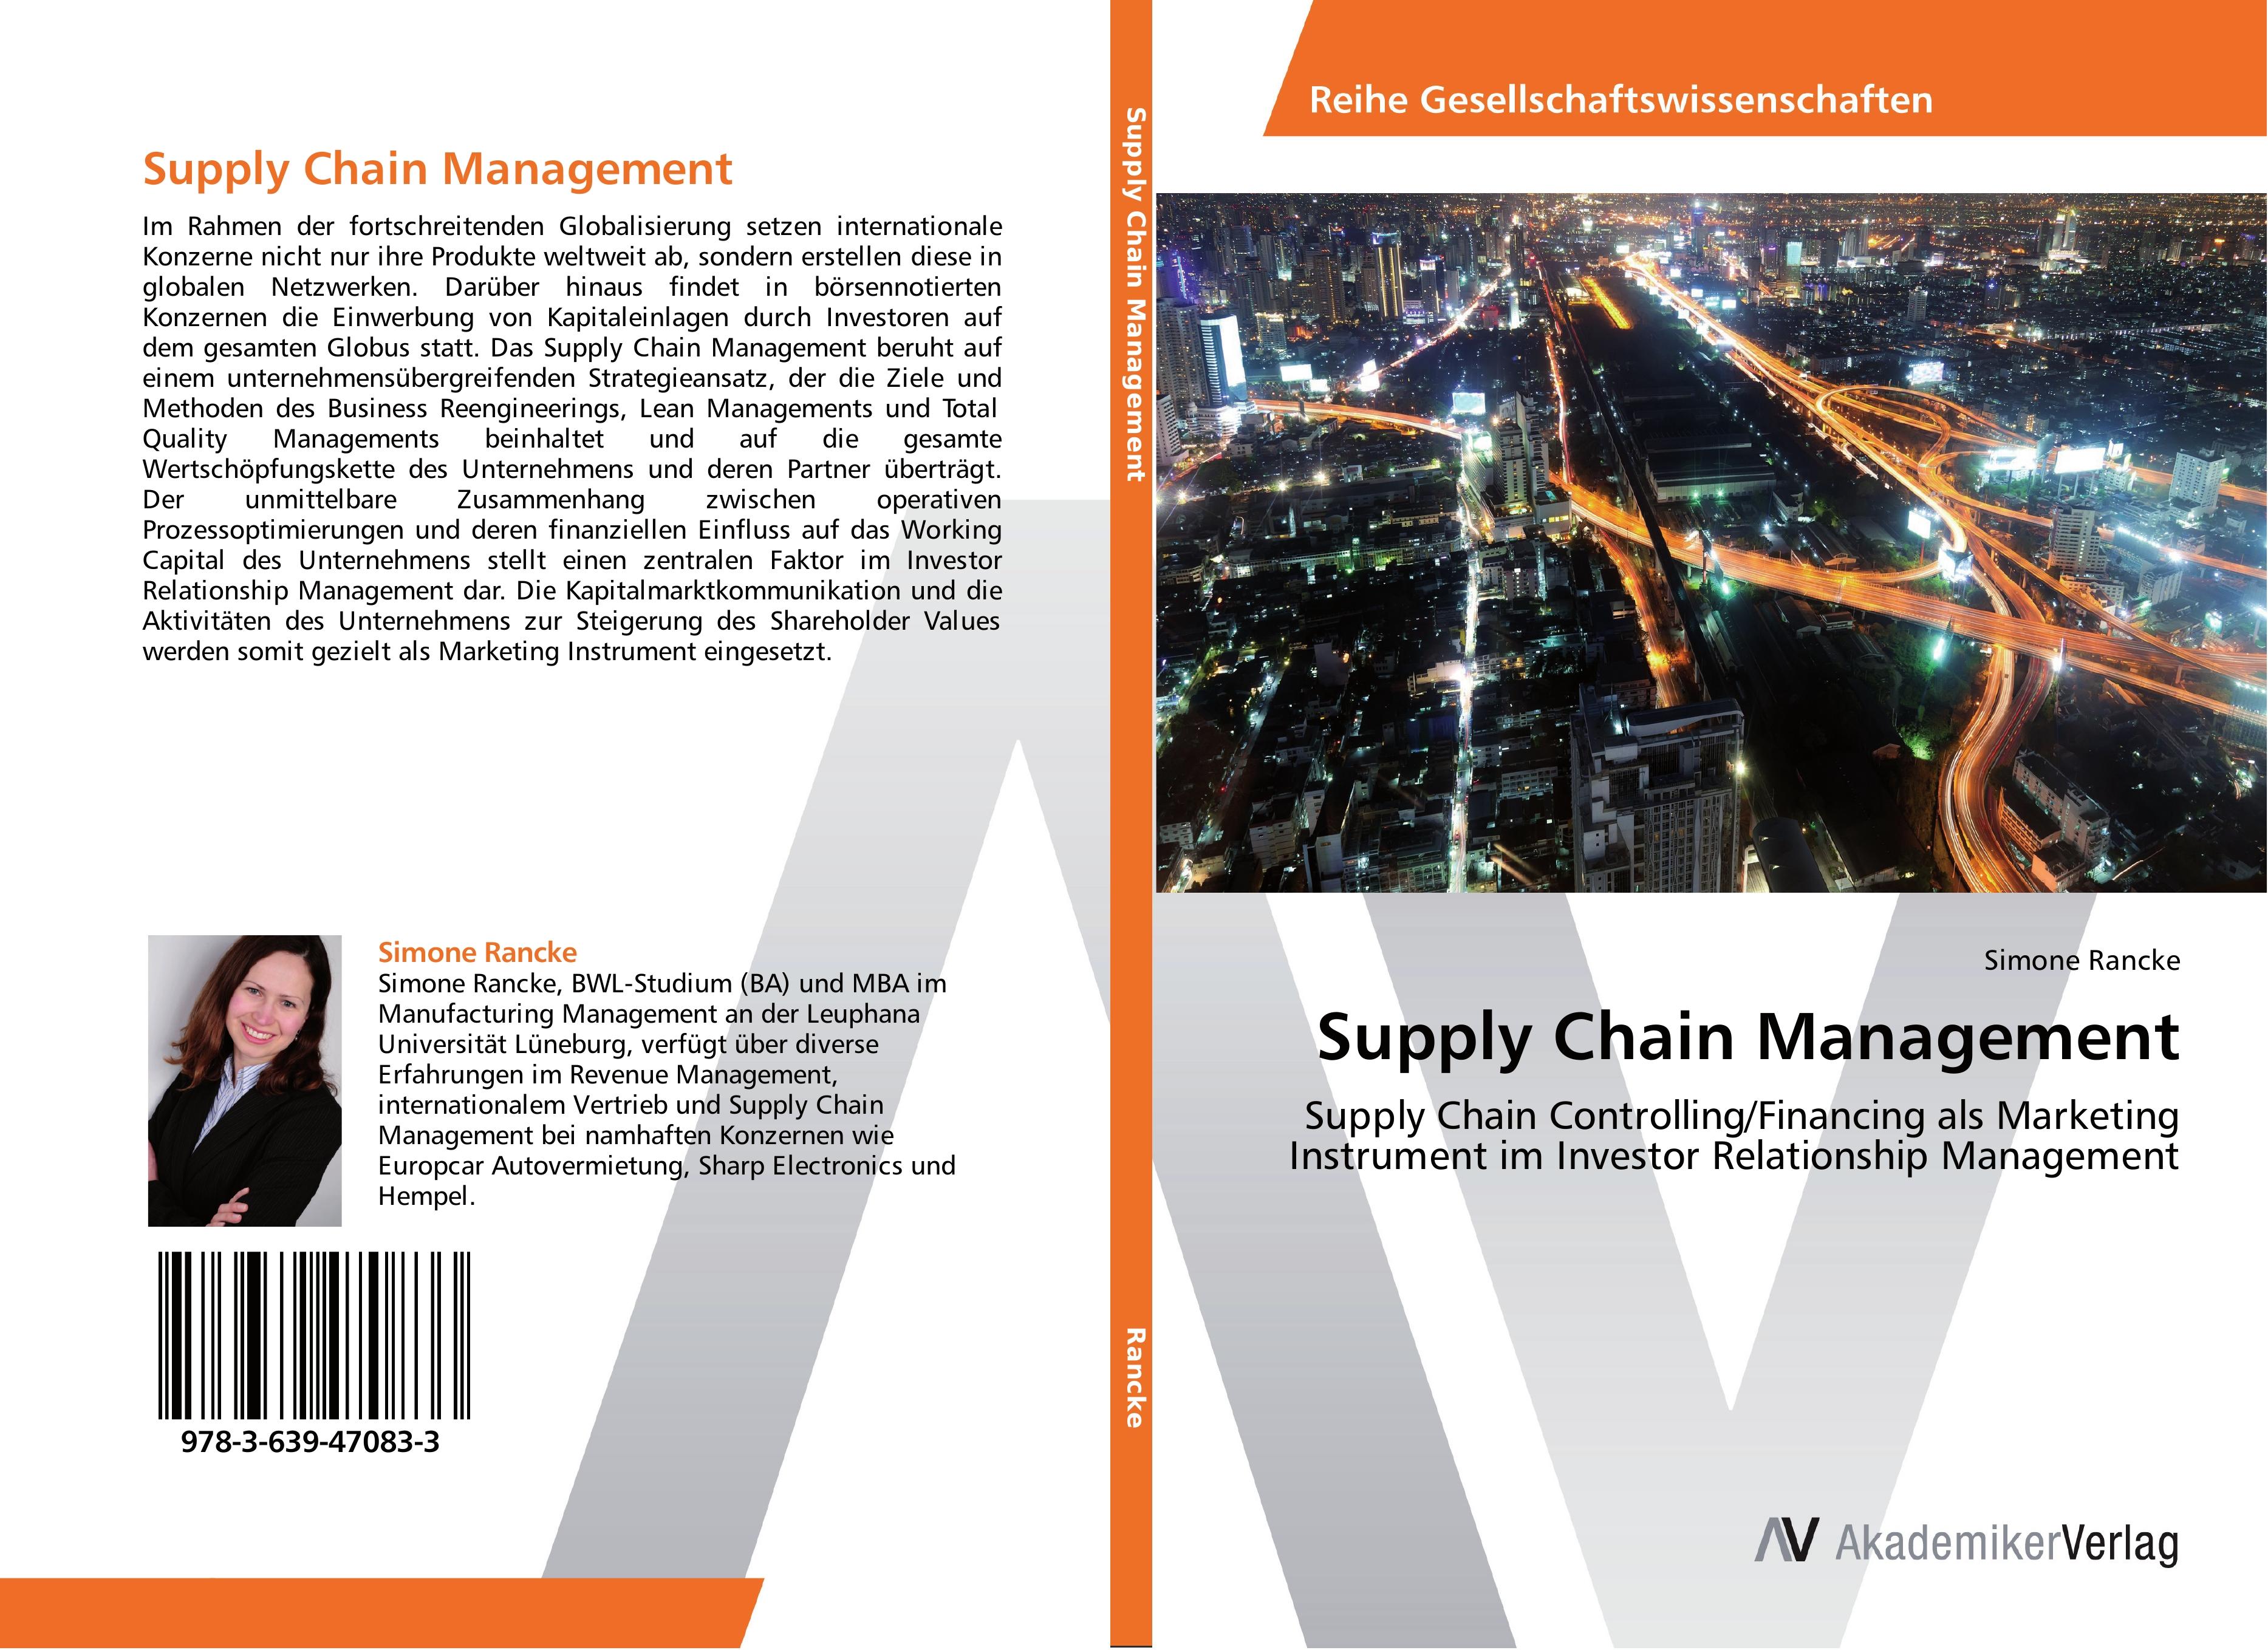 Supply Chain Management - Simone Rancke